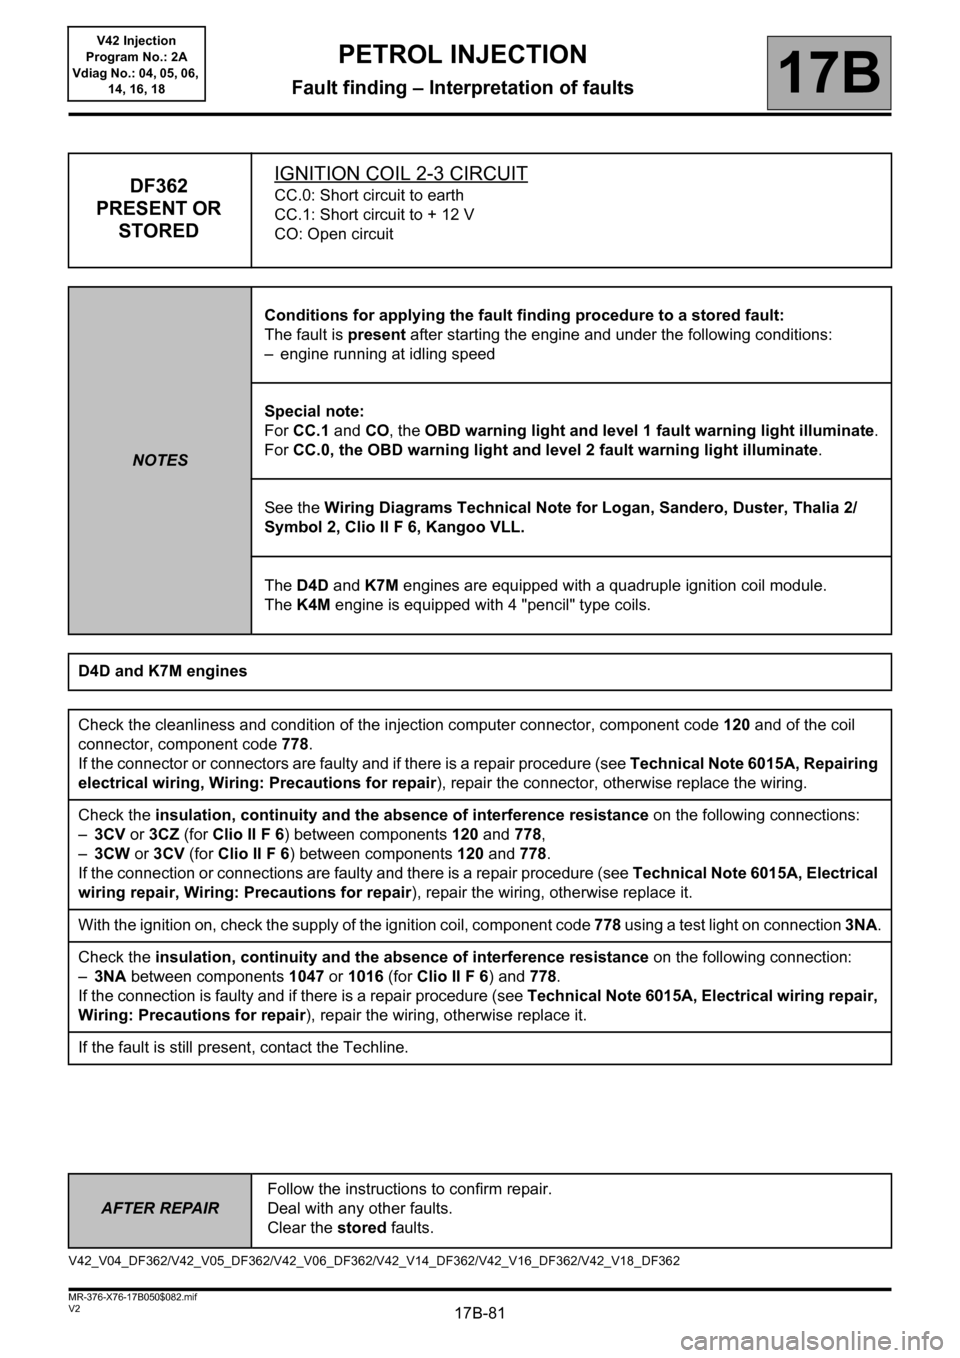 RENAULT KANGOO 2013 X61 / 2.G Petrol V42 Injection Workshop Manual 17B-81V2 MR-376-X76-17B050$082.mif
PETROL INJECTION
Fault finding – Interpretation of faults17B
V42 Injection
Program No.: 2A
Vdiag No.: 04, 05, 06, 
14, 16, 18
AFTER REPAIRFollow the instructions t